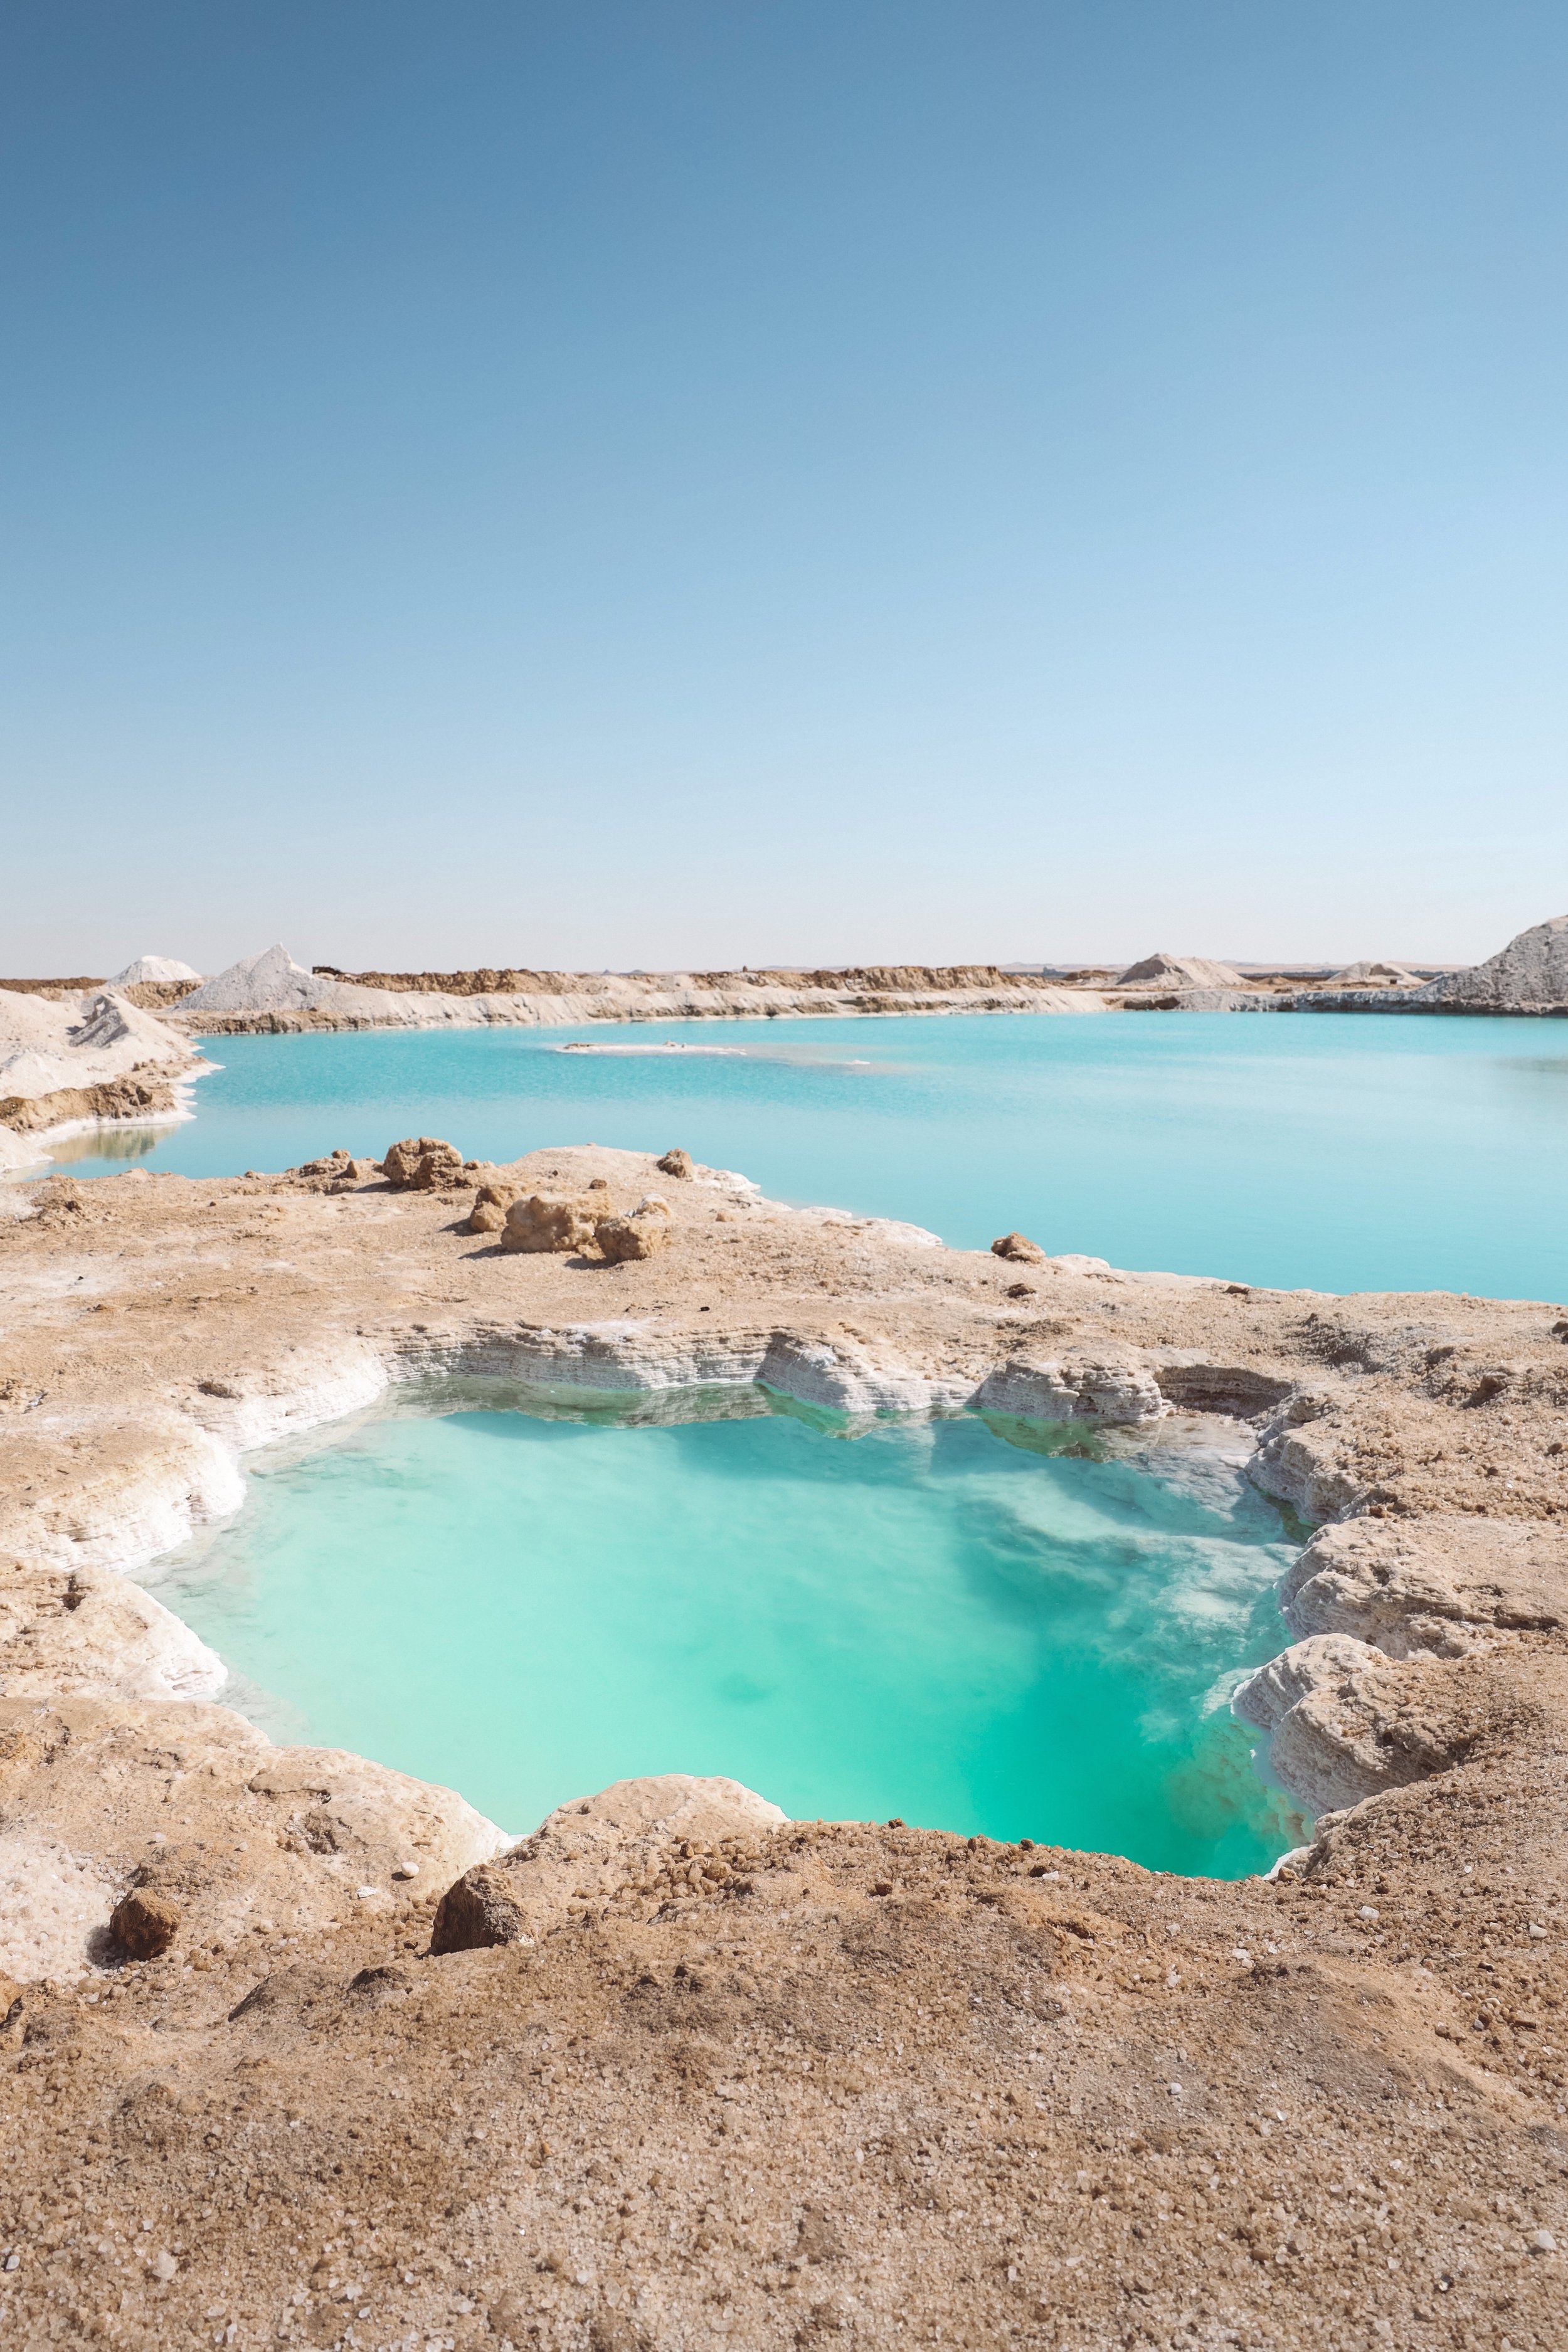 So many blue lakes - Siwa Salt Lakes - Siwa Oasis - Egypt